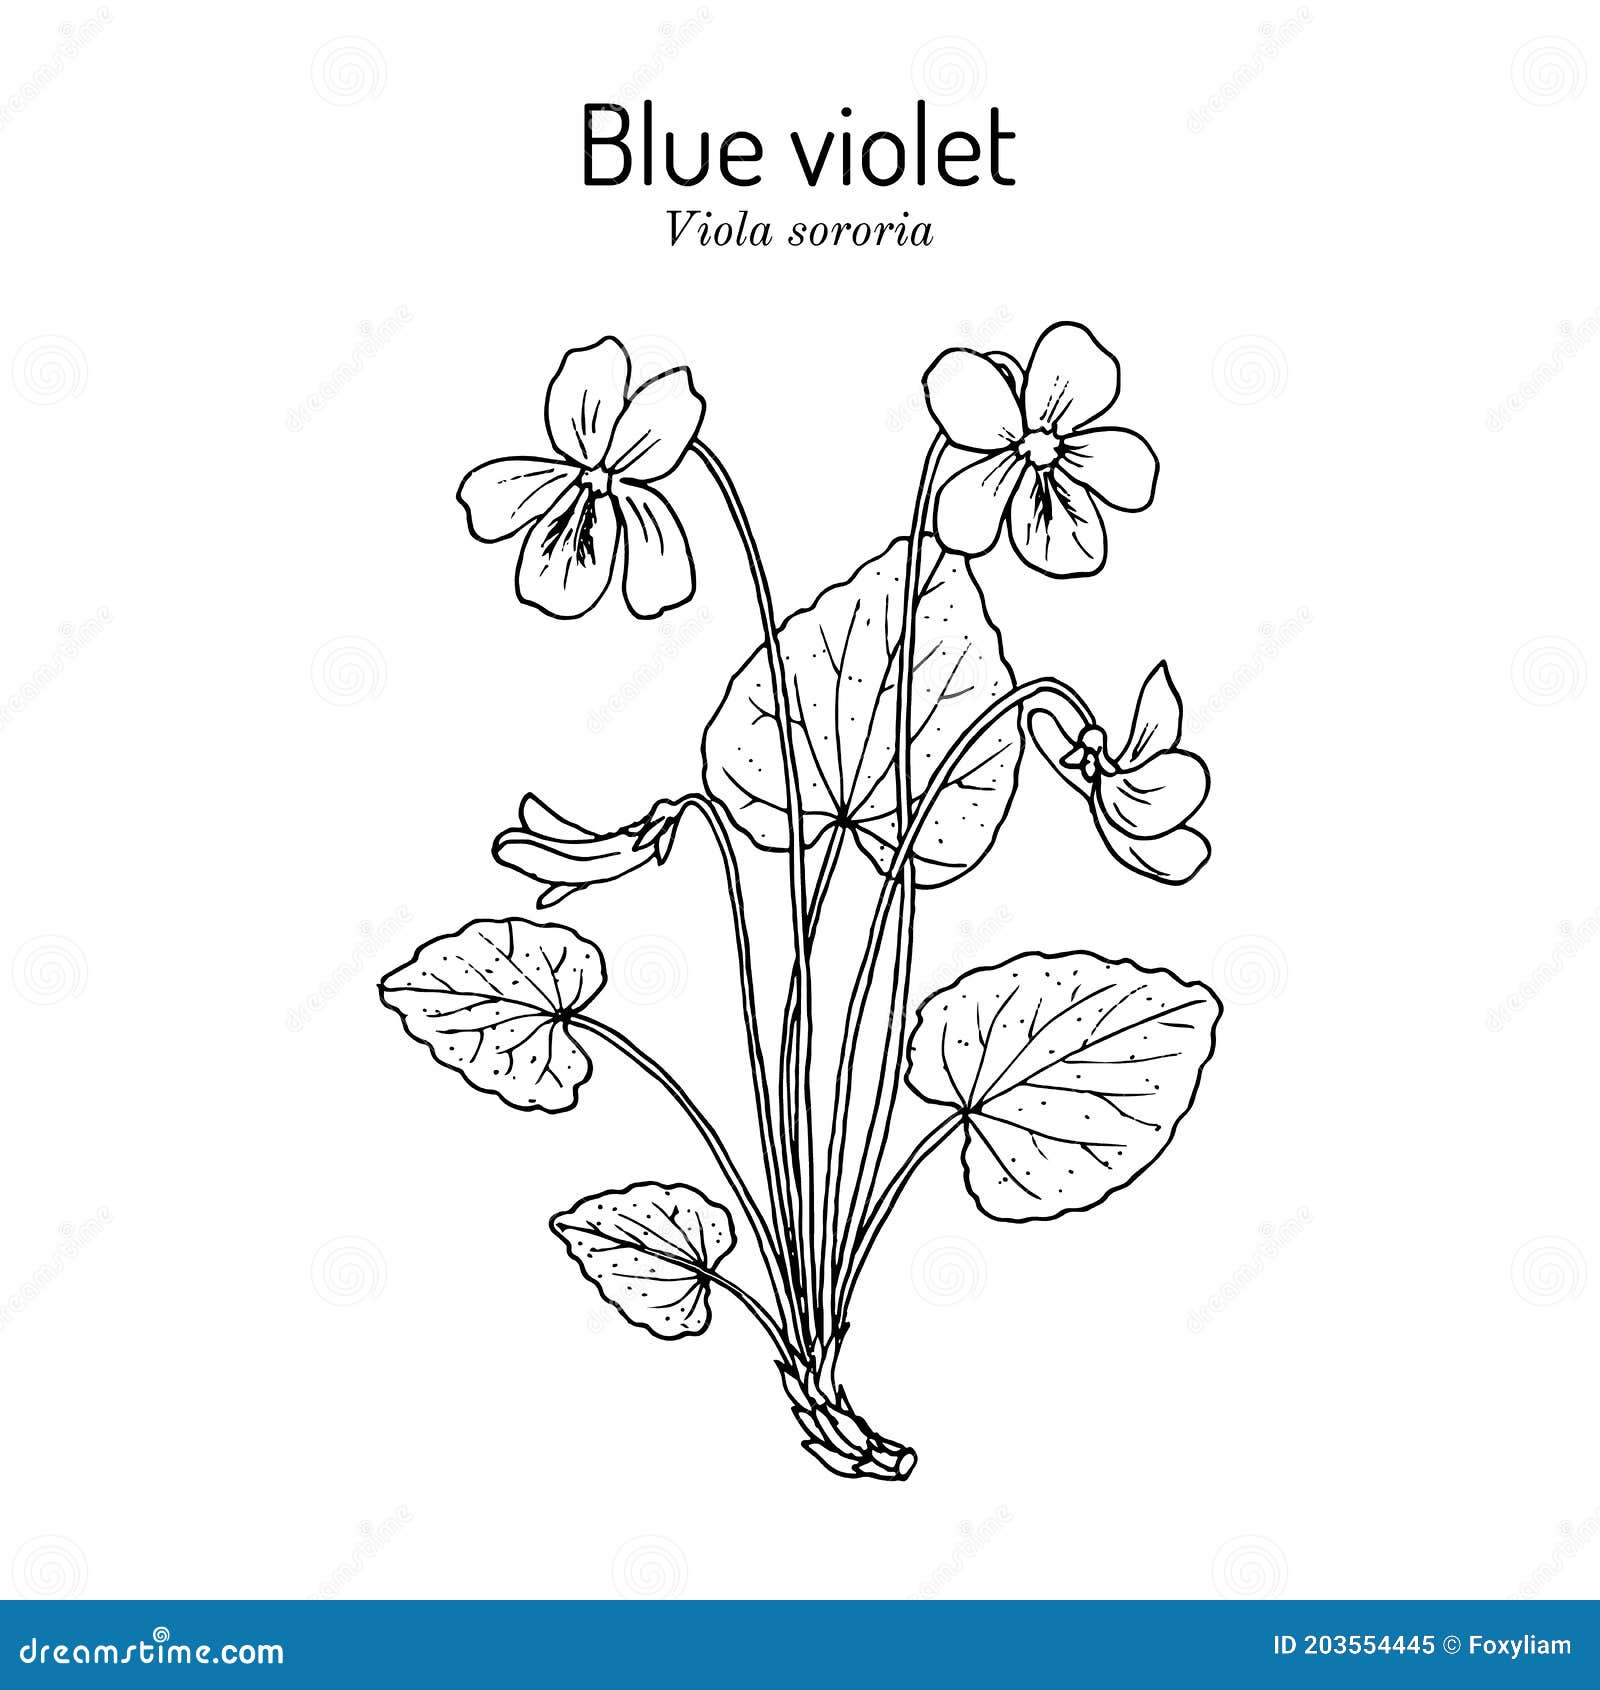 blue violet viola sororia , medicinal plant